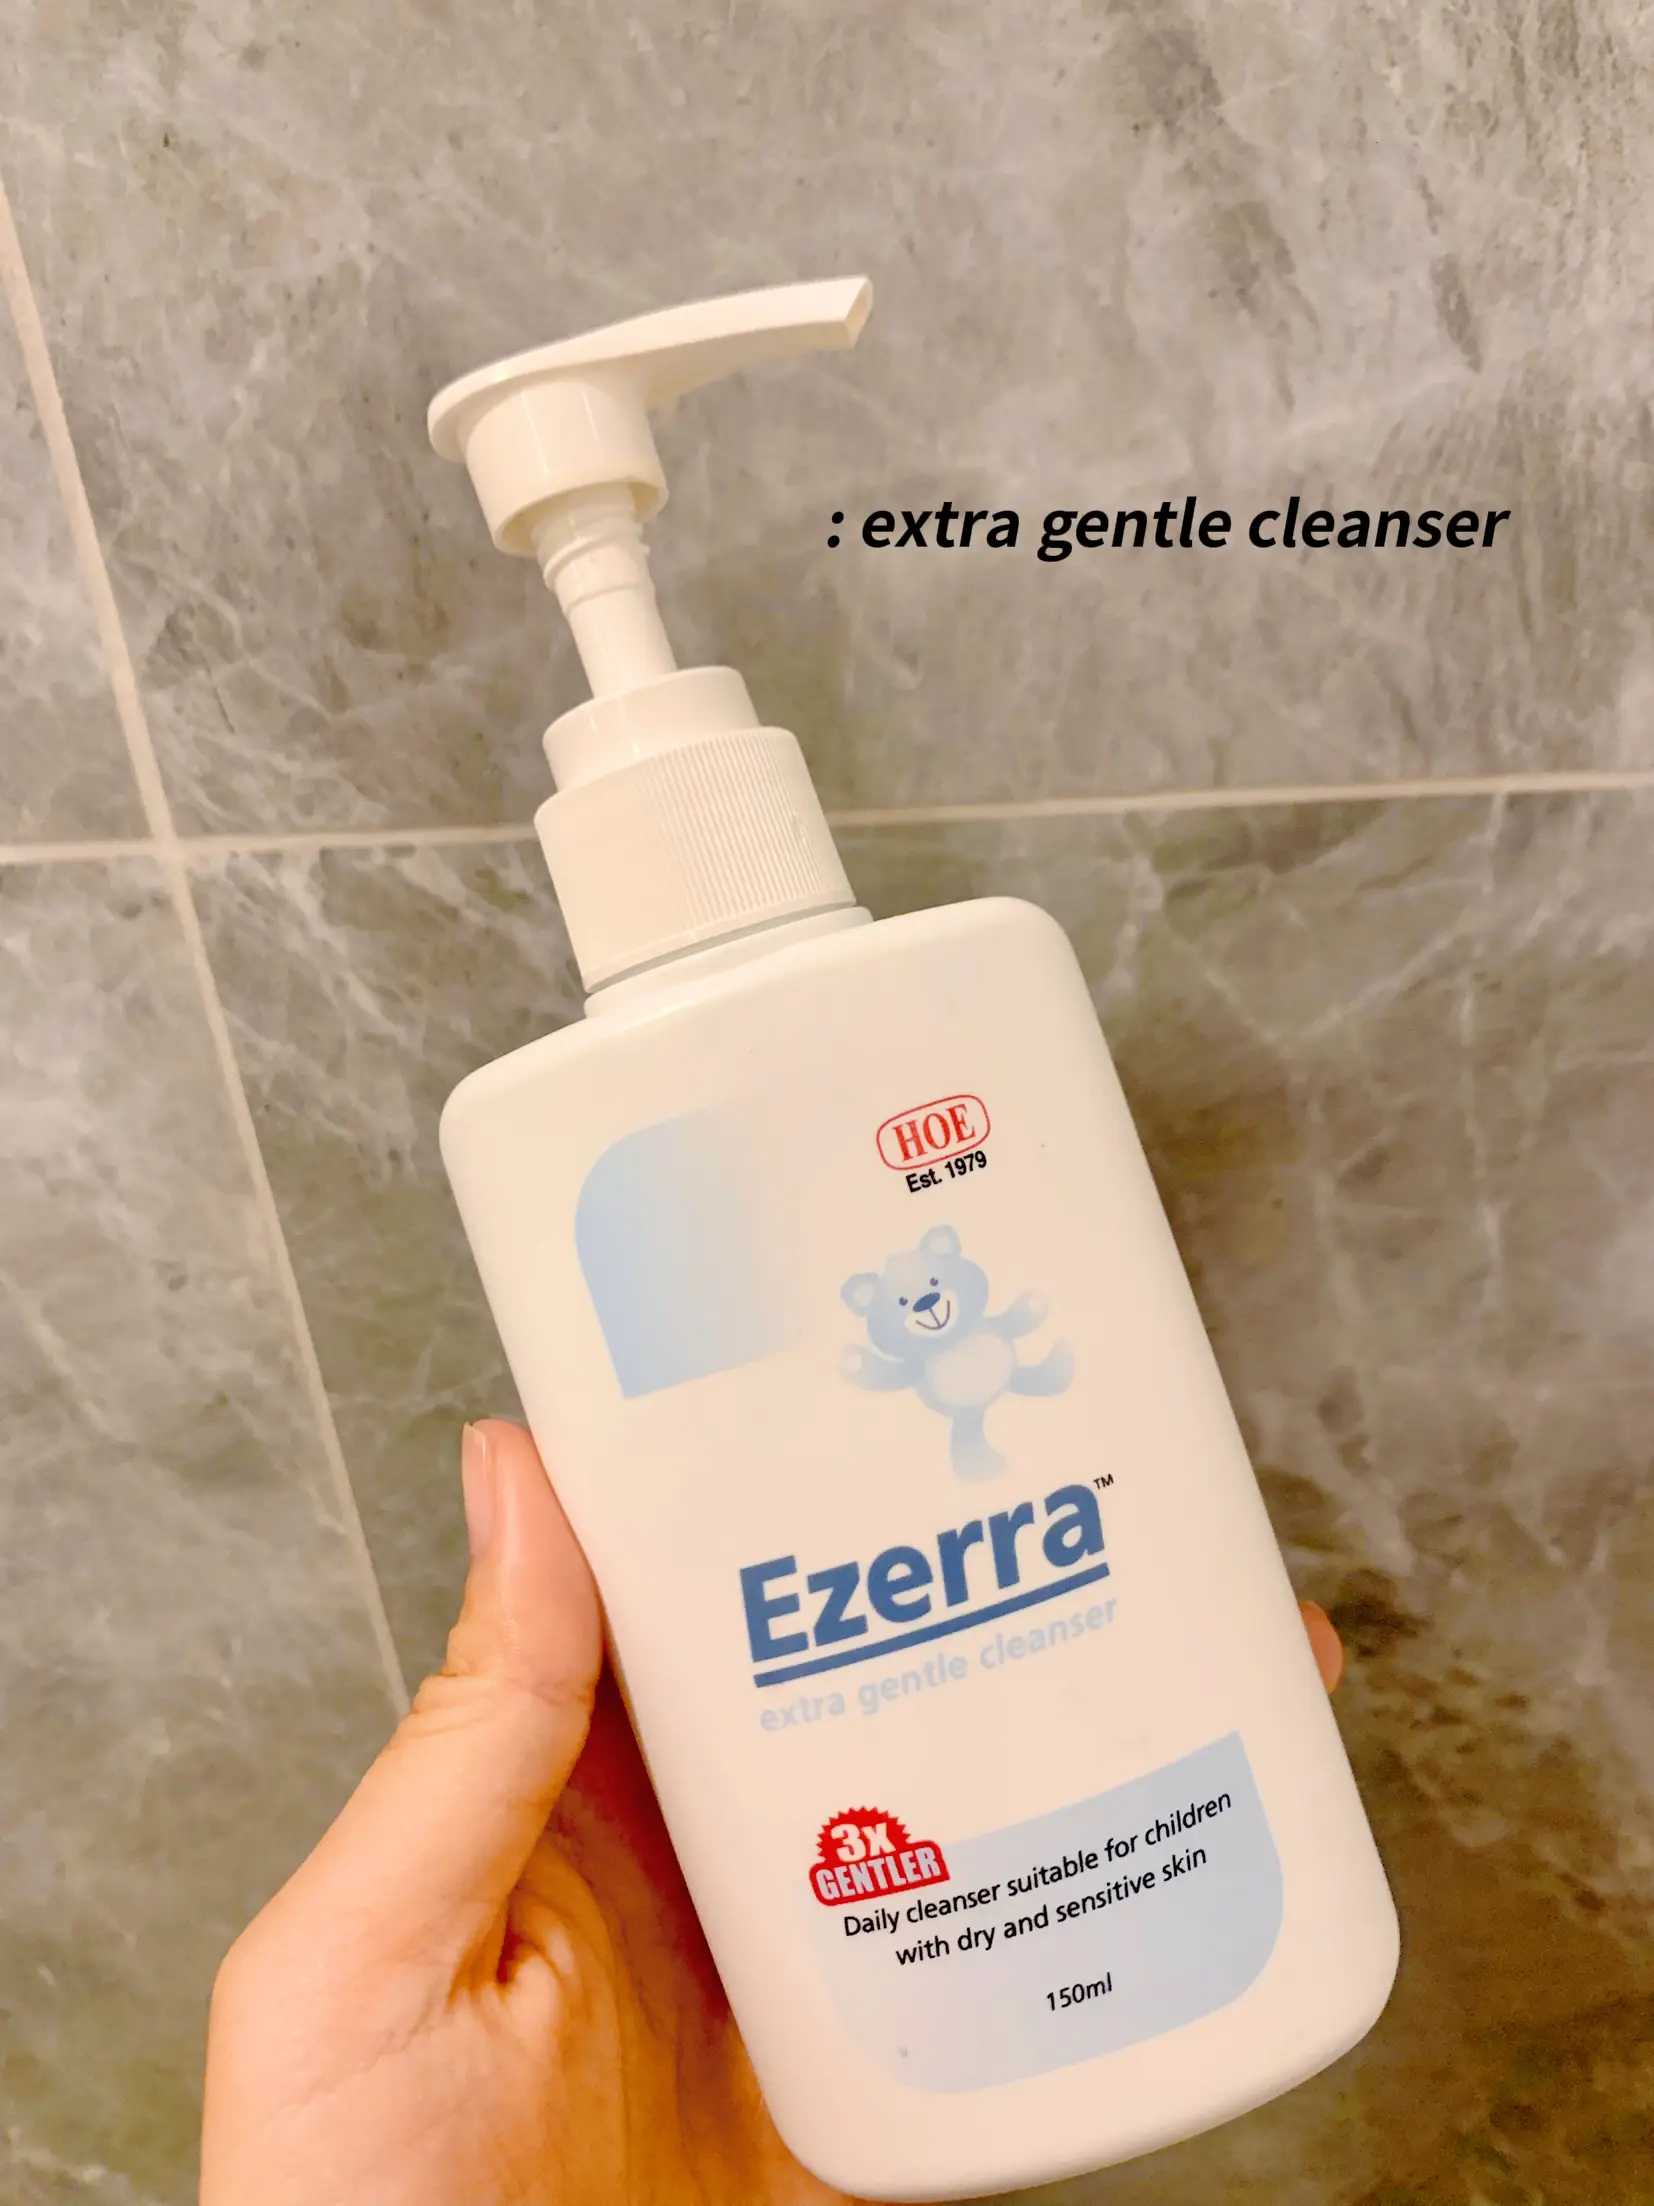 EZERRA EXTRA GENTLE CLEANSER (500ML)